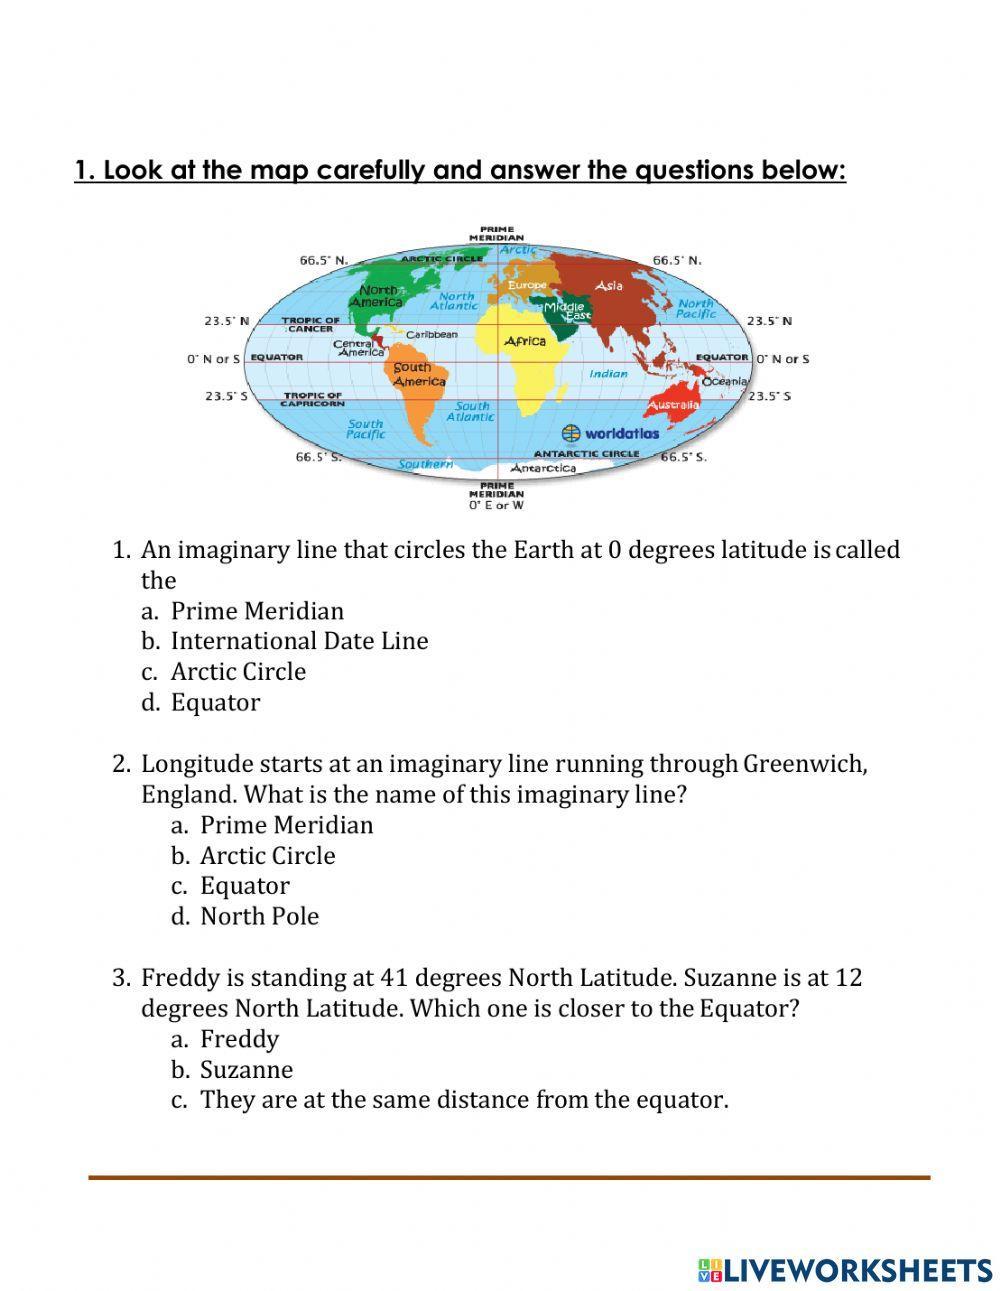 Lines of longitude and latitude